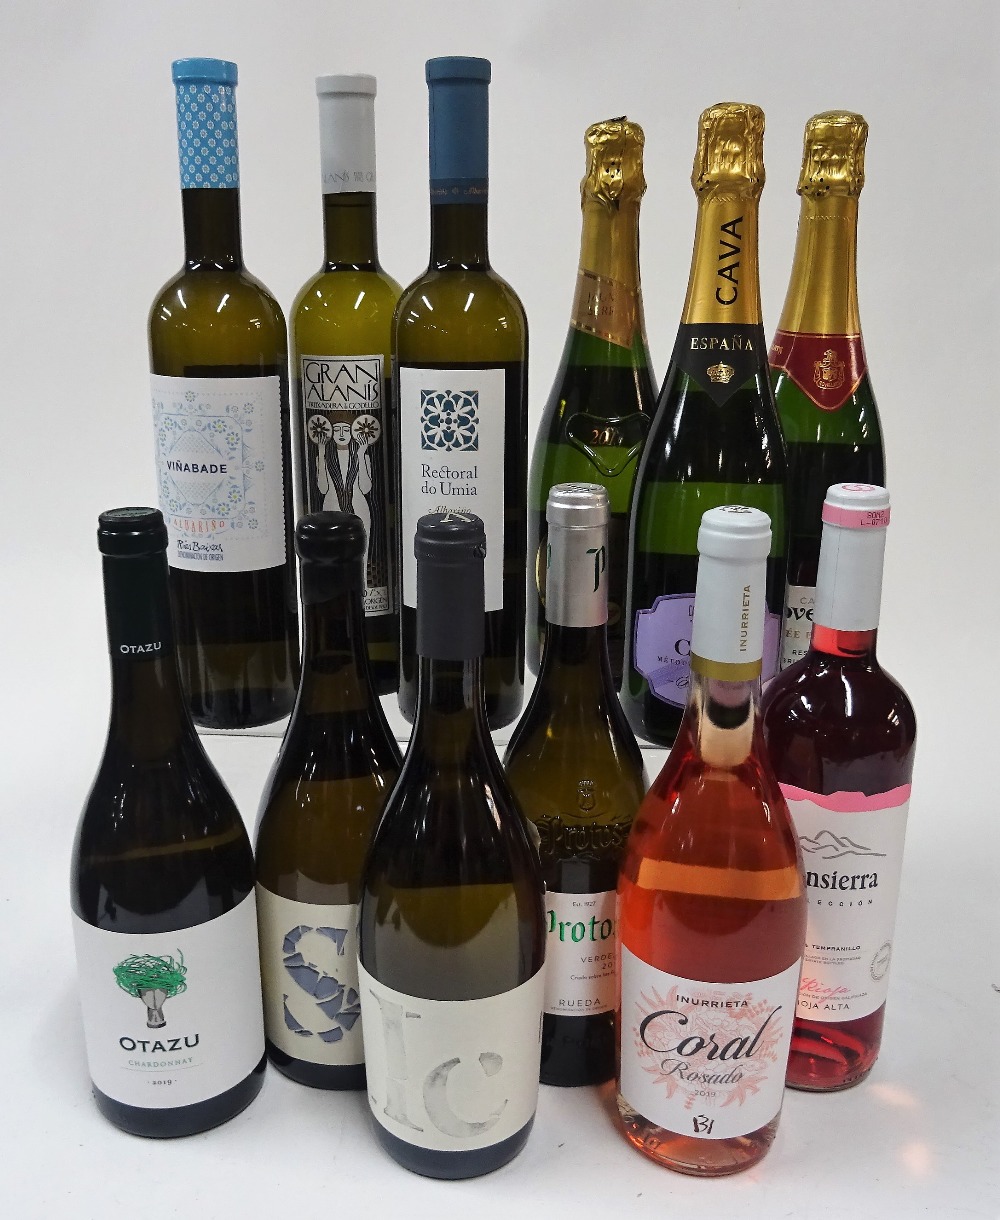 Spanish White, Rosé and Sparkling Wine: Otazu Chardonnay 2019; S. Garnatxa Blanca 2015; Ilercavonia Garnatxa Blanca 2019; Protos Verdejo 2019;...